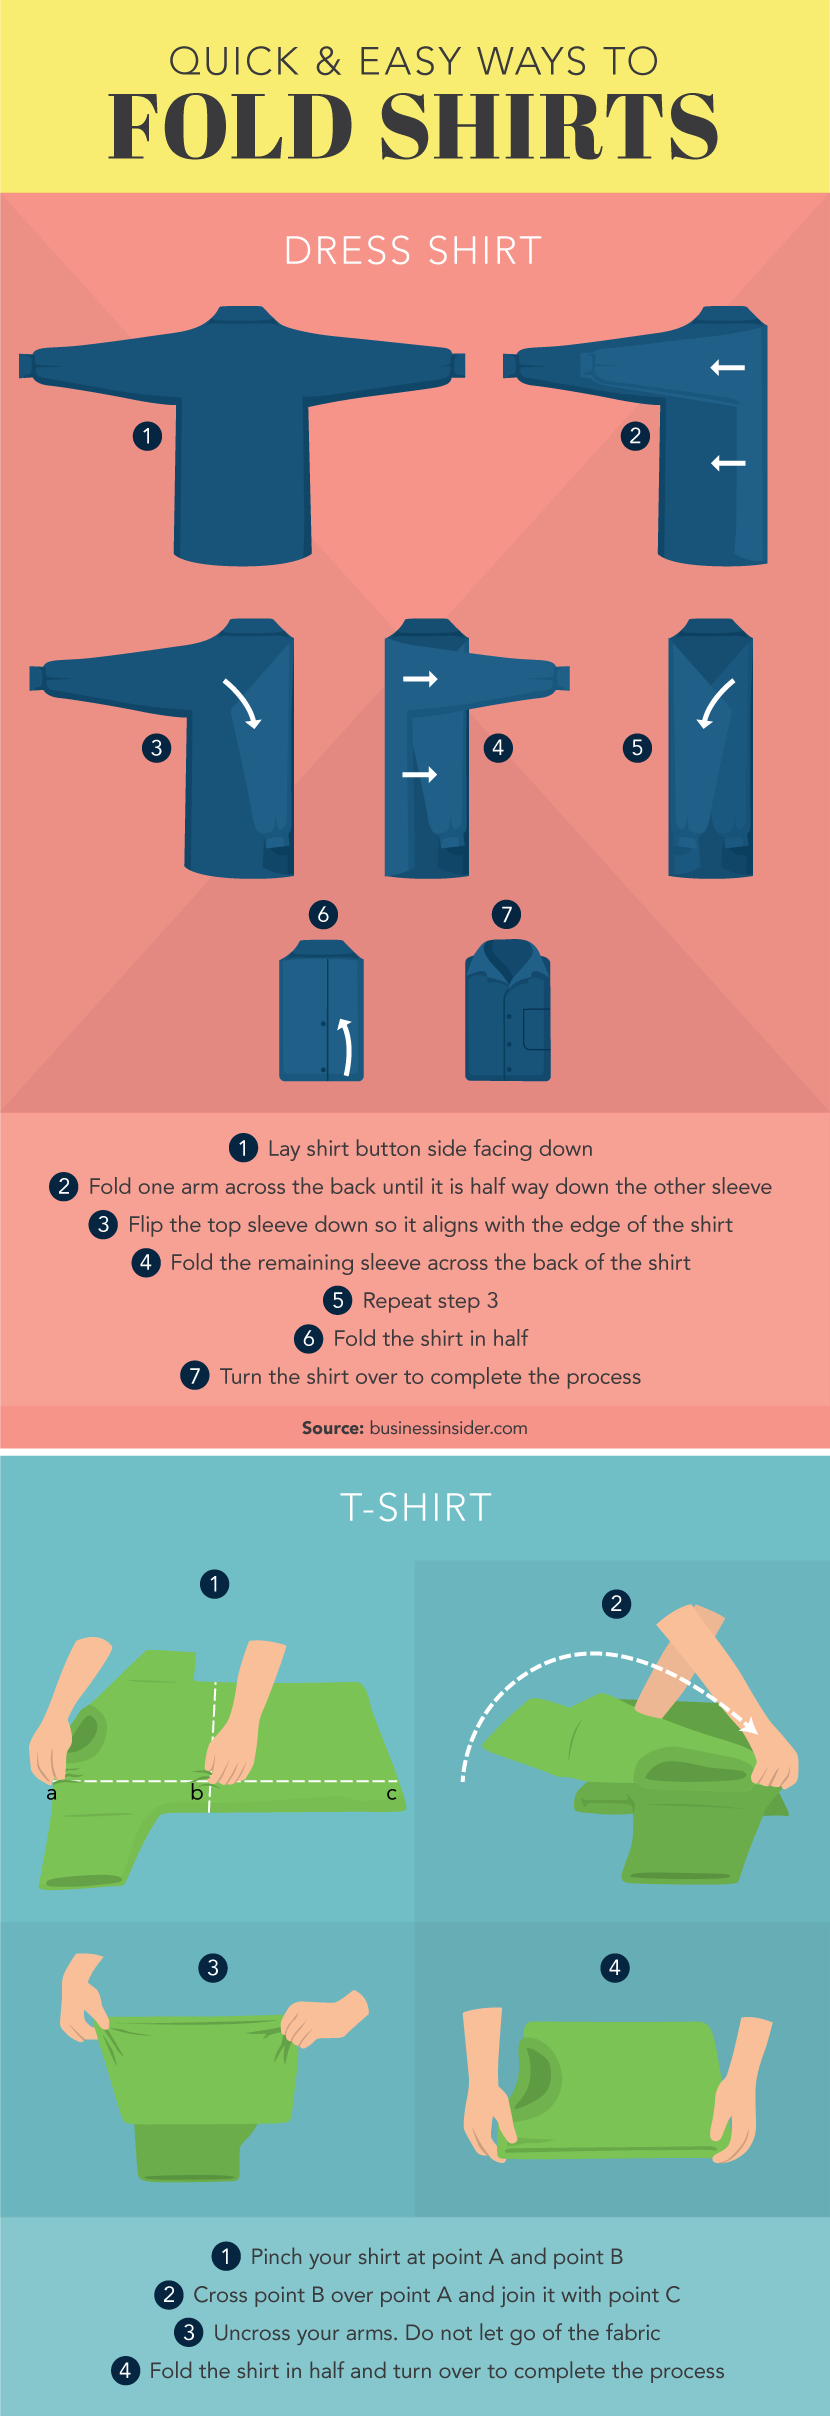 Easy Ways to Fold Shirt - Organize Your Closet